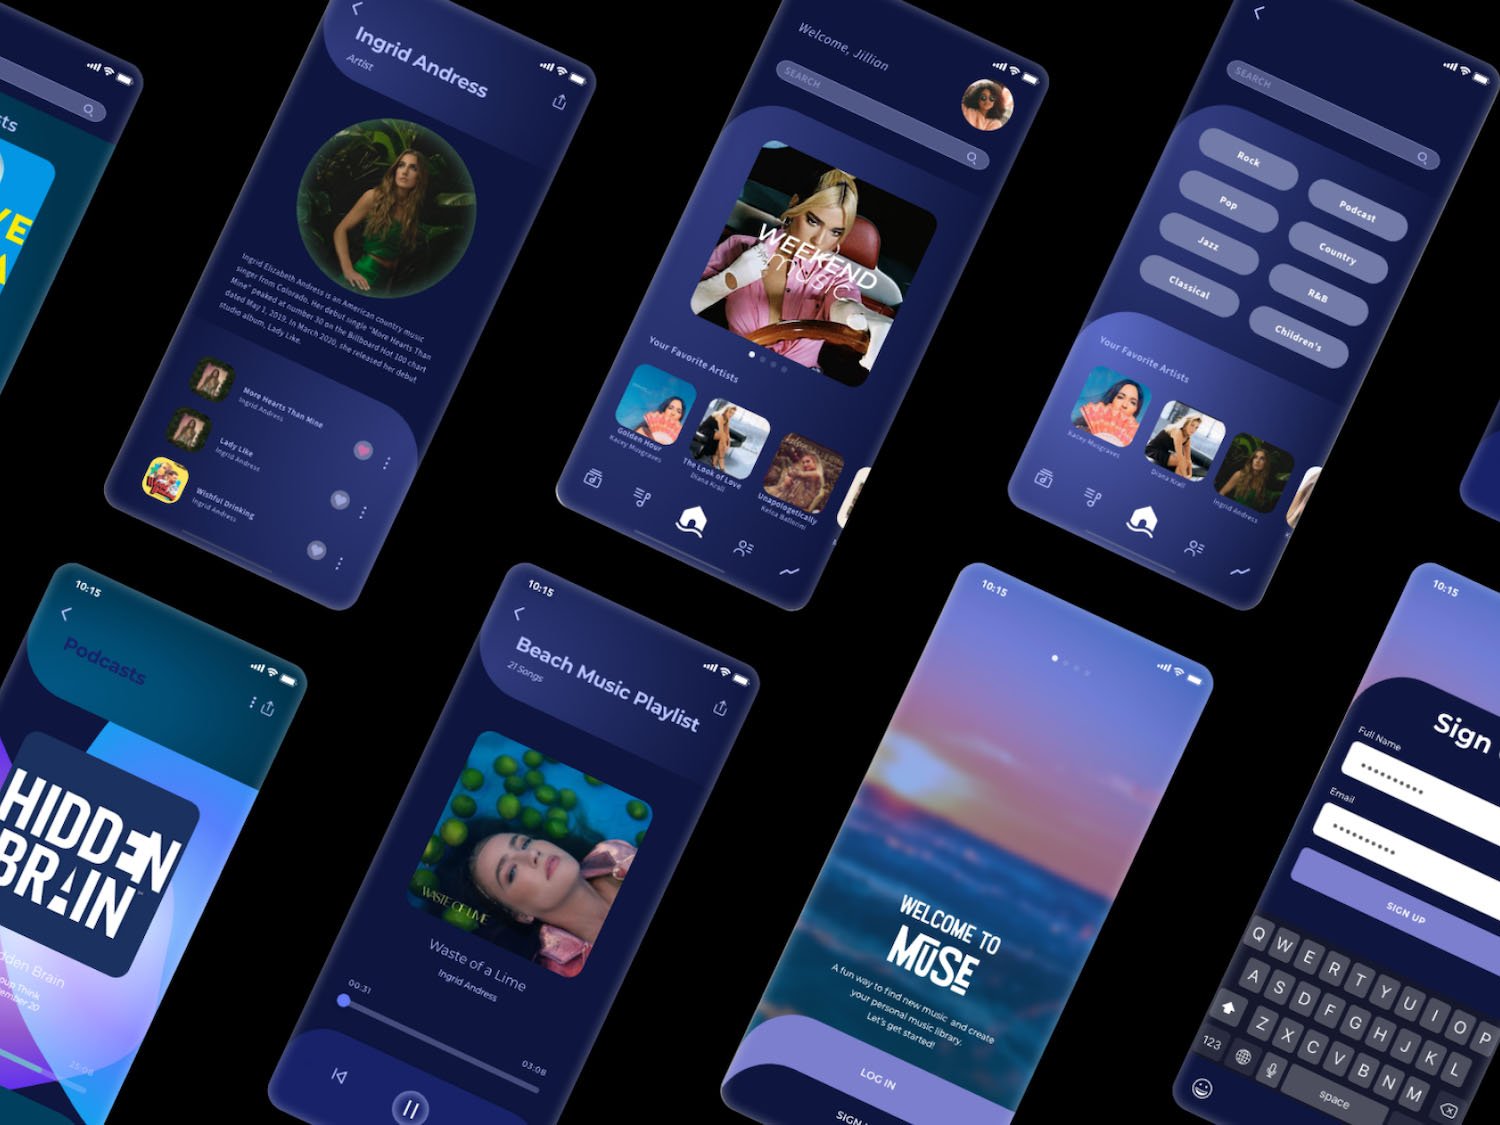 Mockup of several screens of a music app designed by UI/UX designer Chris Olson.